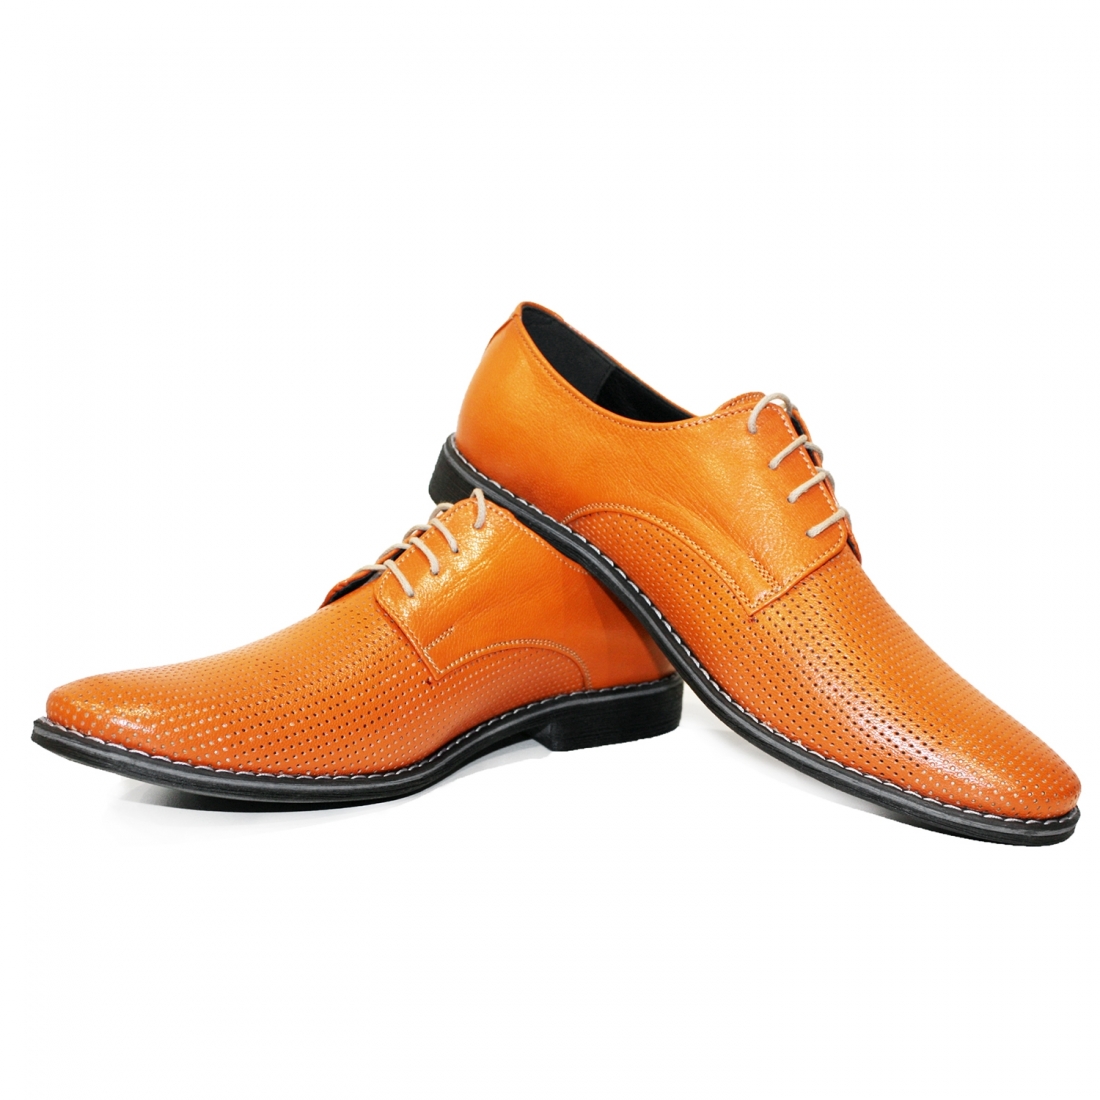 Modello Pomarone - クラシックシューズ - Handmade Colorful Italian Leather Shoes